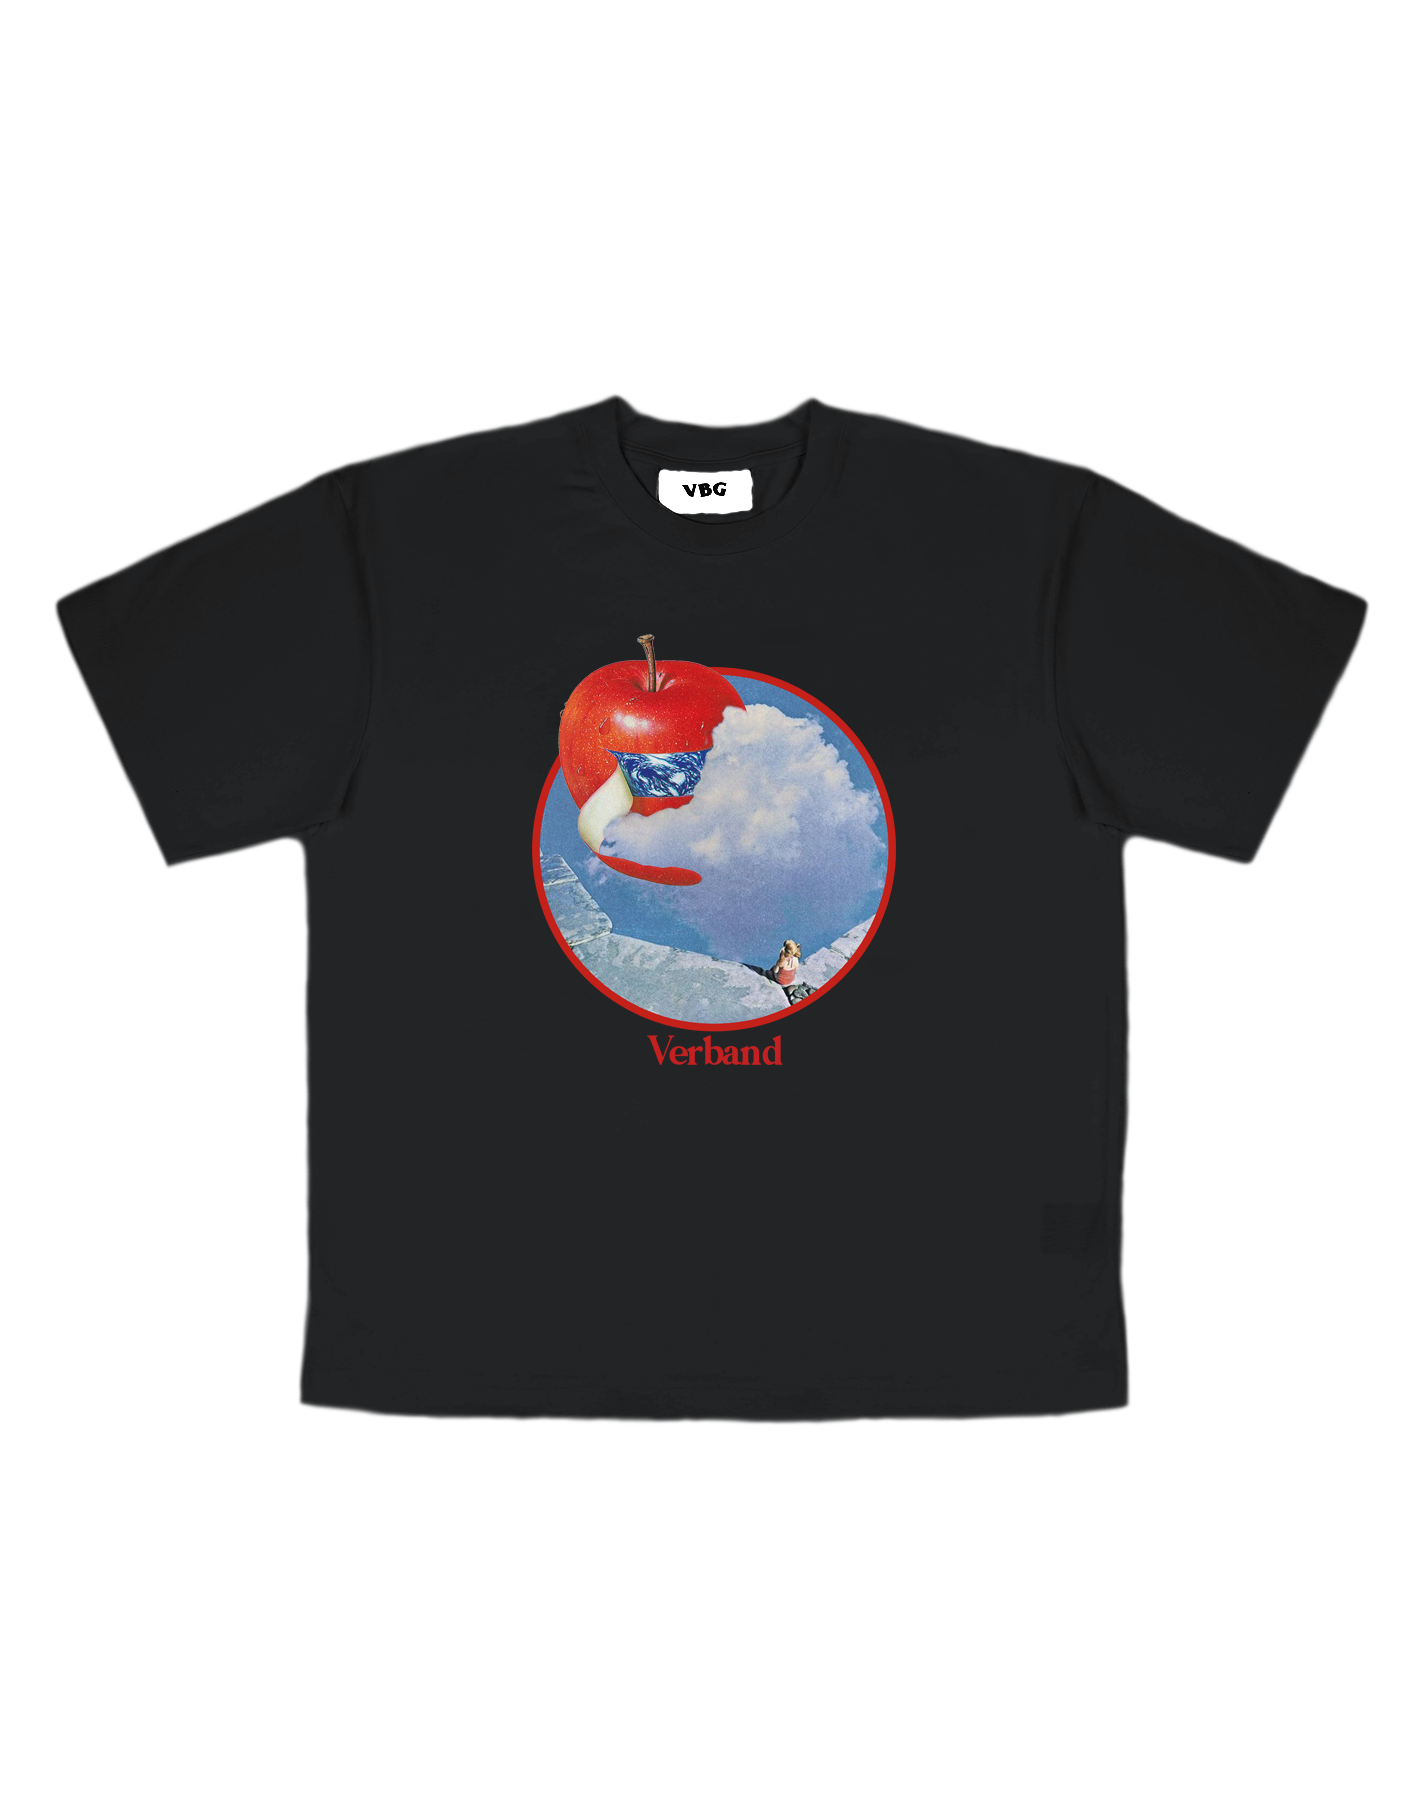 Psy-Apple T-Shirt - VBG